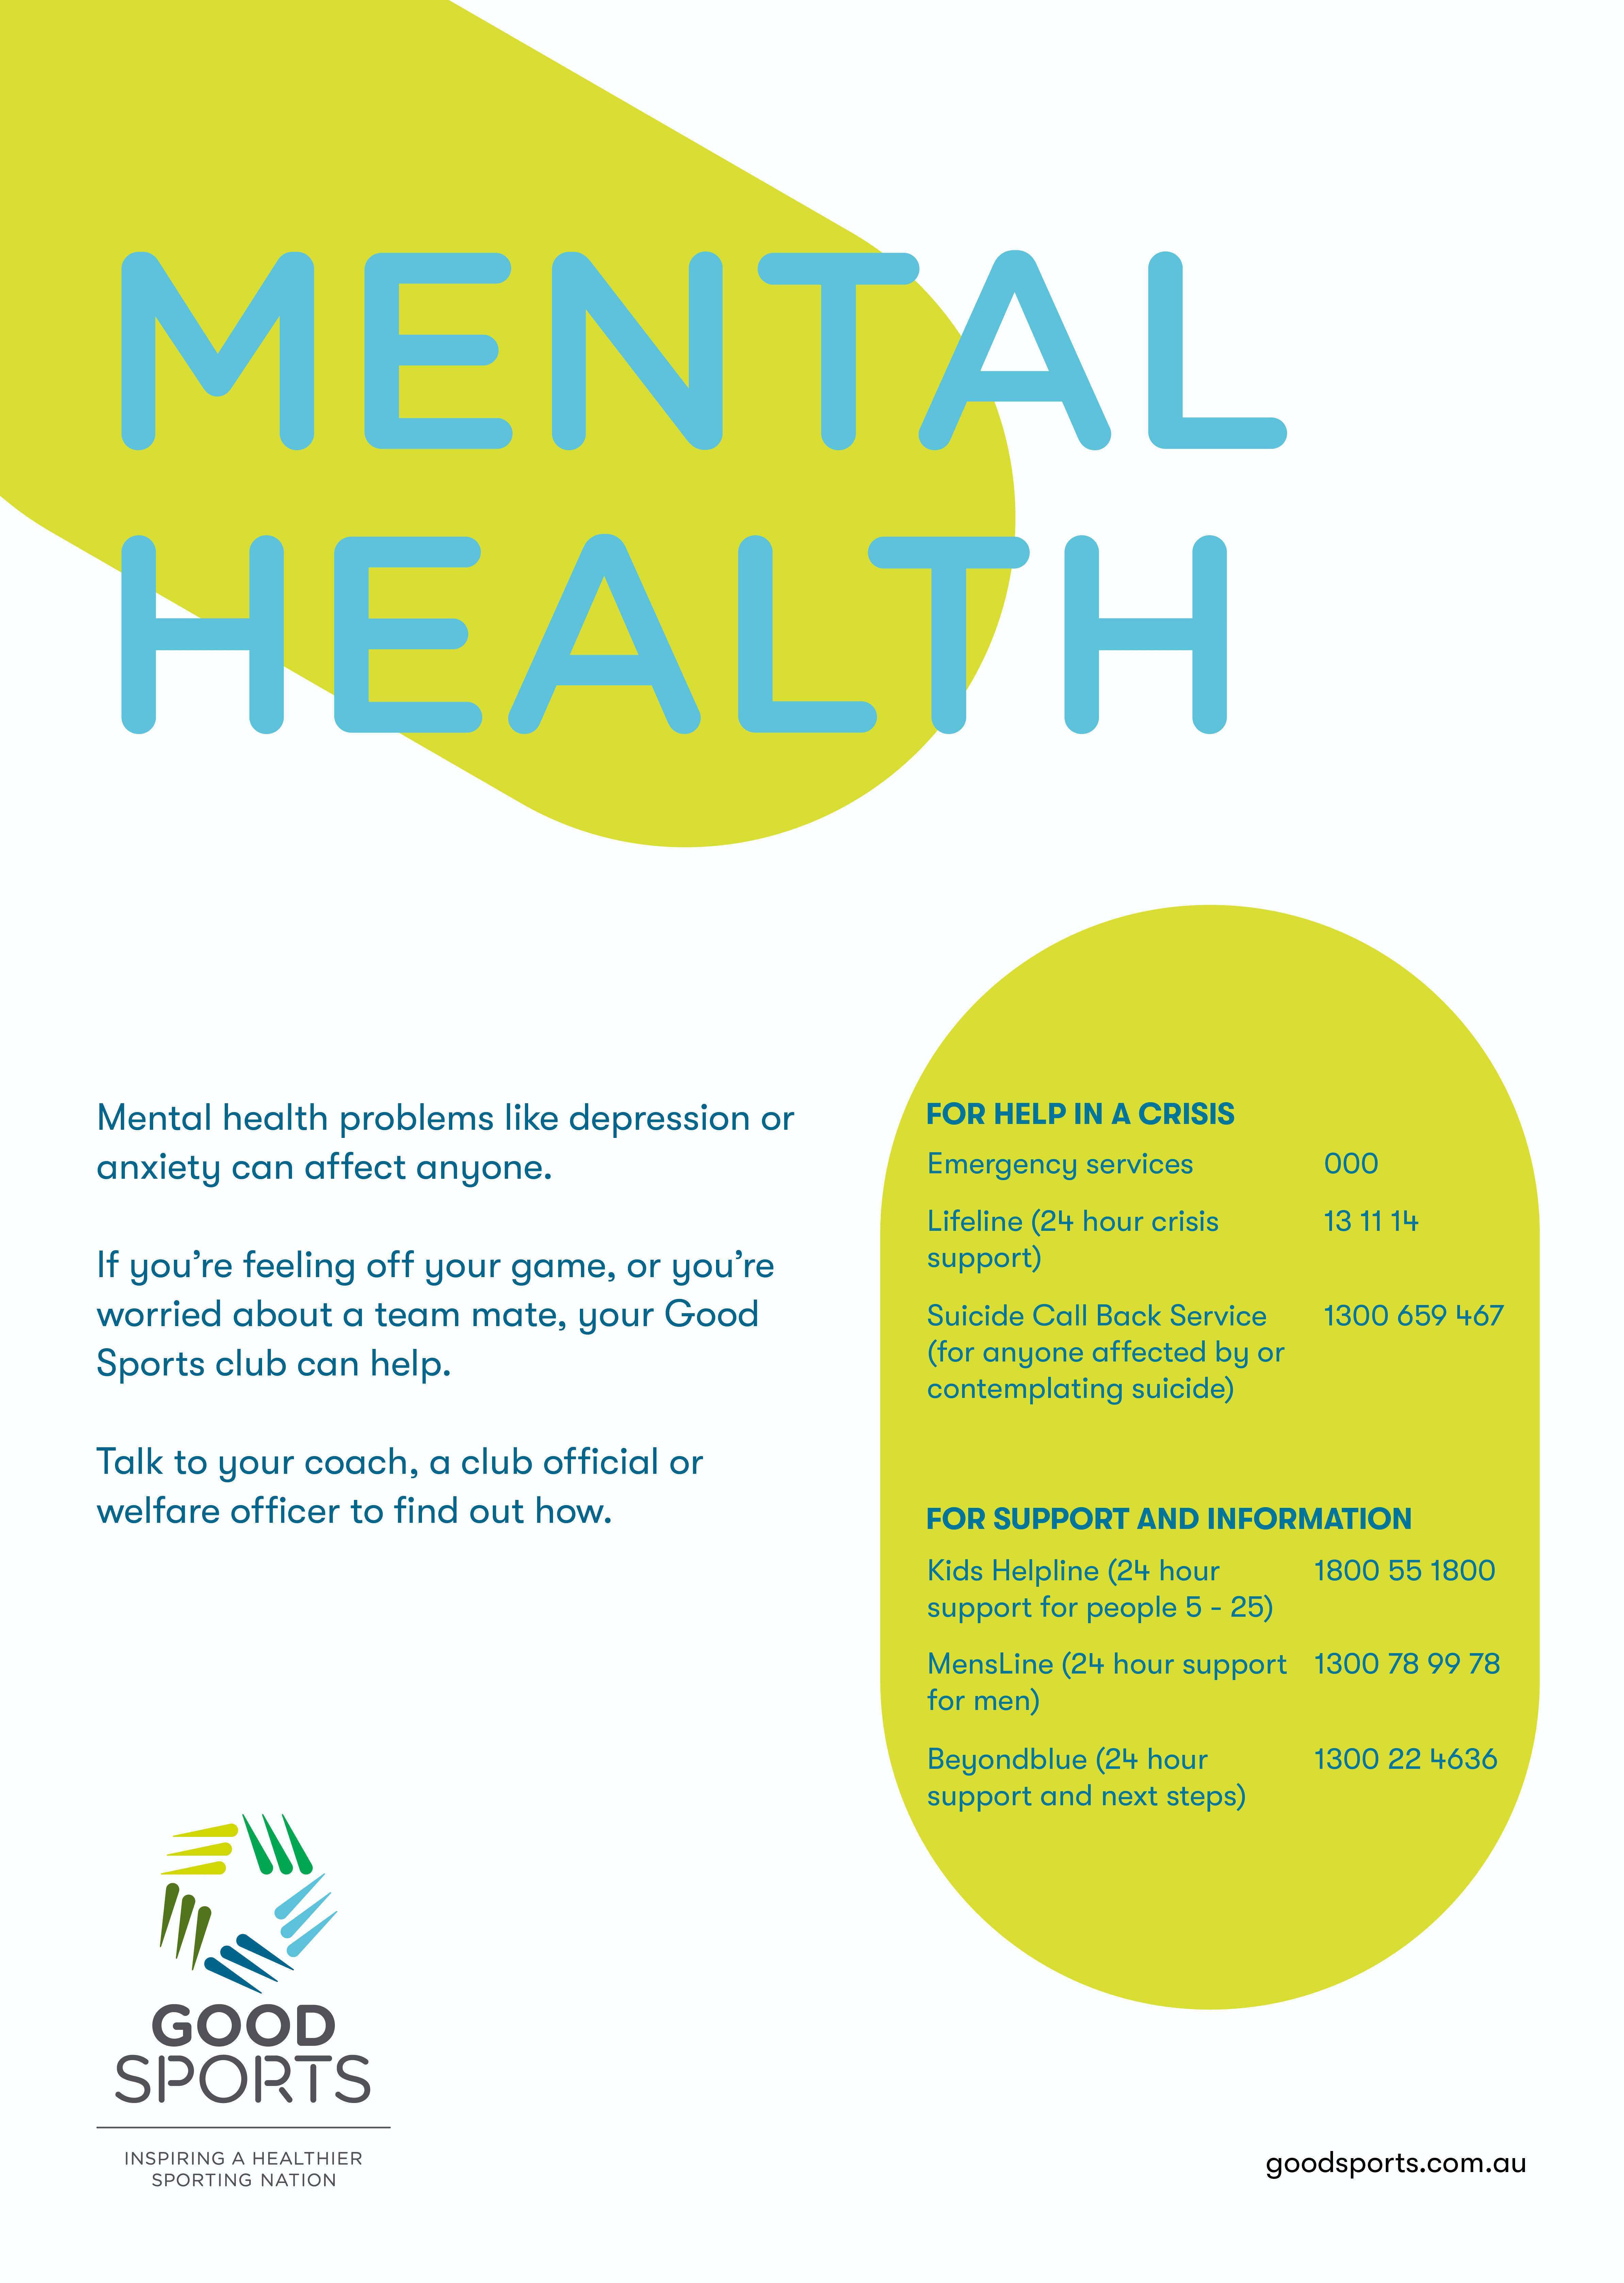 https://goodsports.com.au/resource-documents/mental-health-poster-social-media/